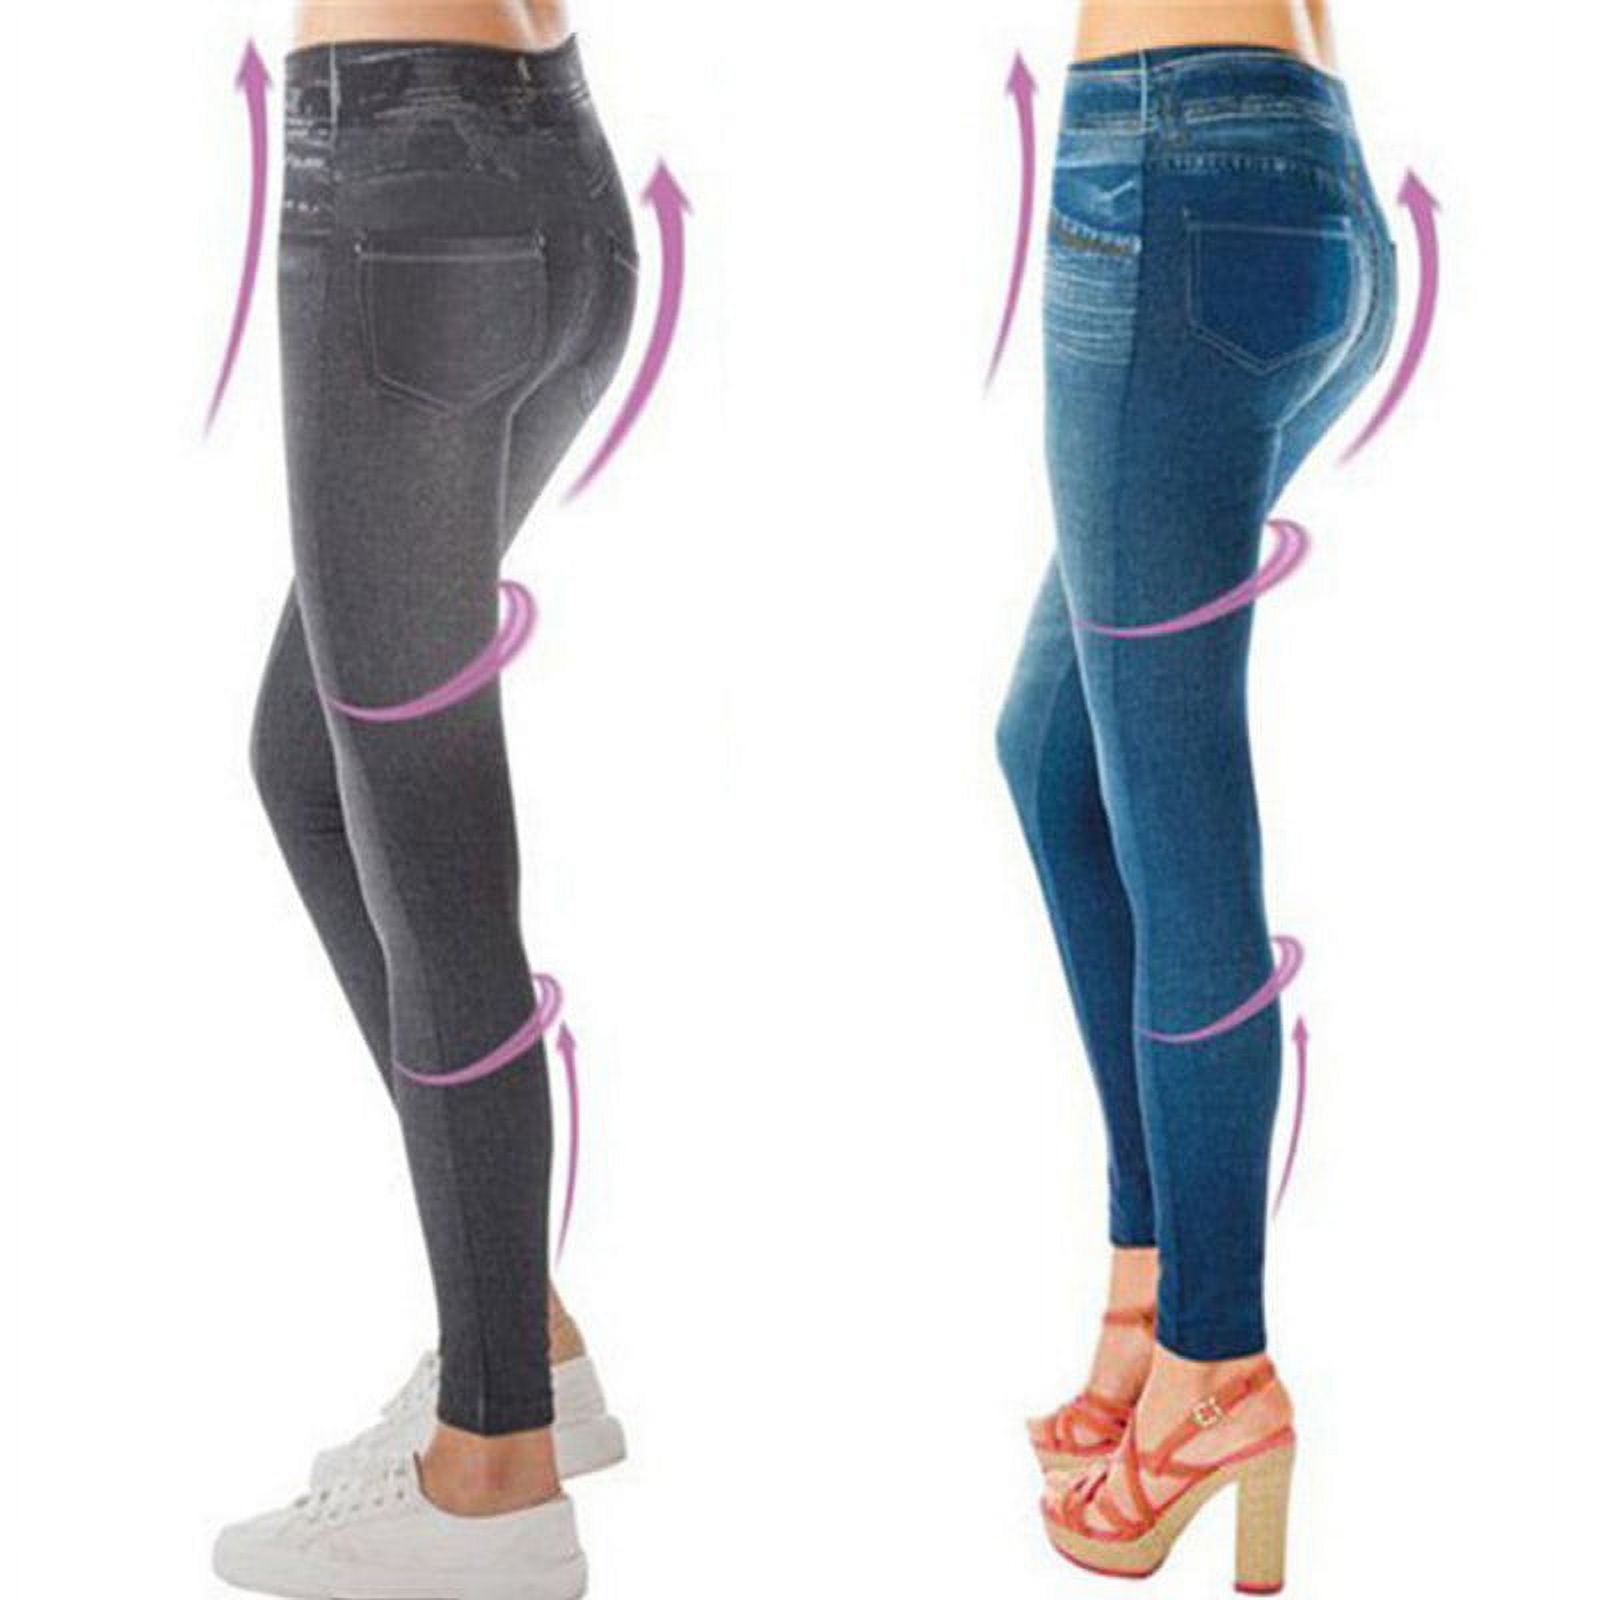 Save Money Jeans Leggings for Women Denim Pants with Pocket Slim Leggings Women Fitness Leggins Regular and Plus Size S-XXXL,Premium Breathable Cotton Jeggings for Women,Skinny Jeans,Clearance - image 2 of 3